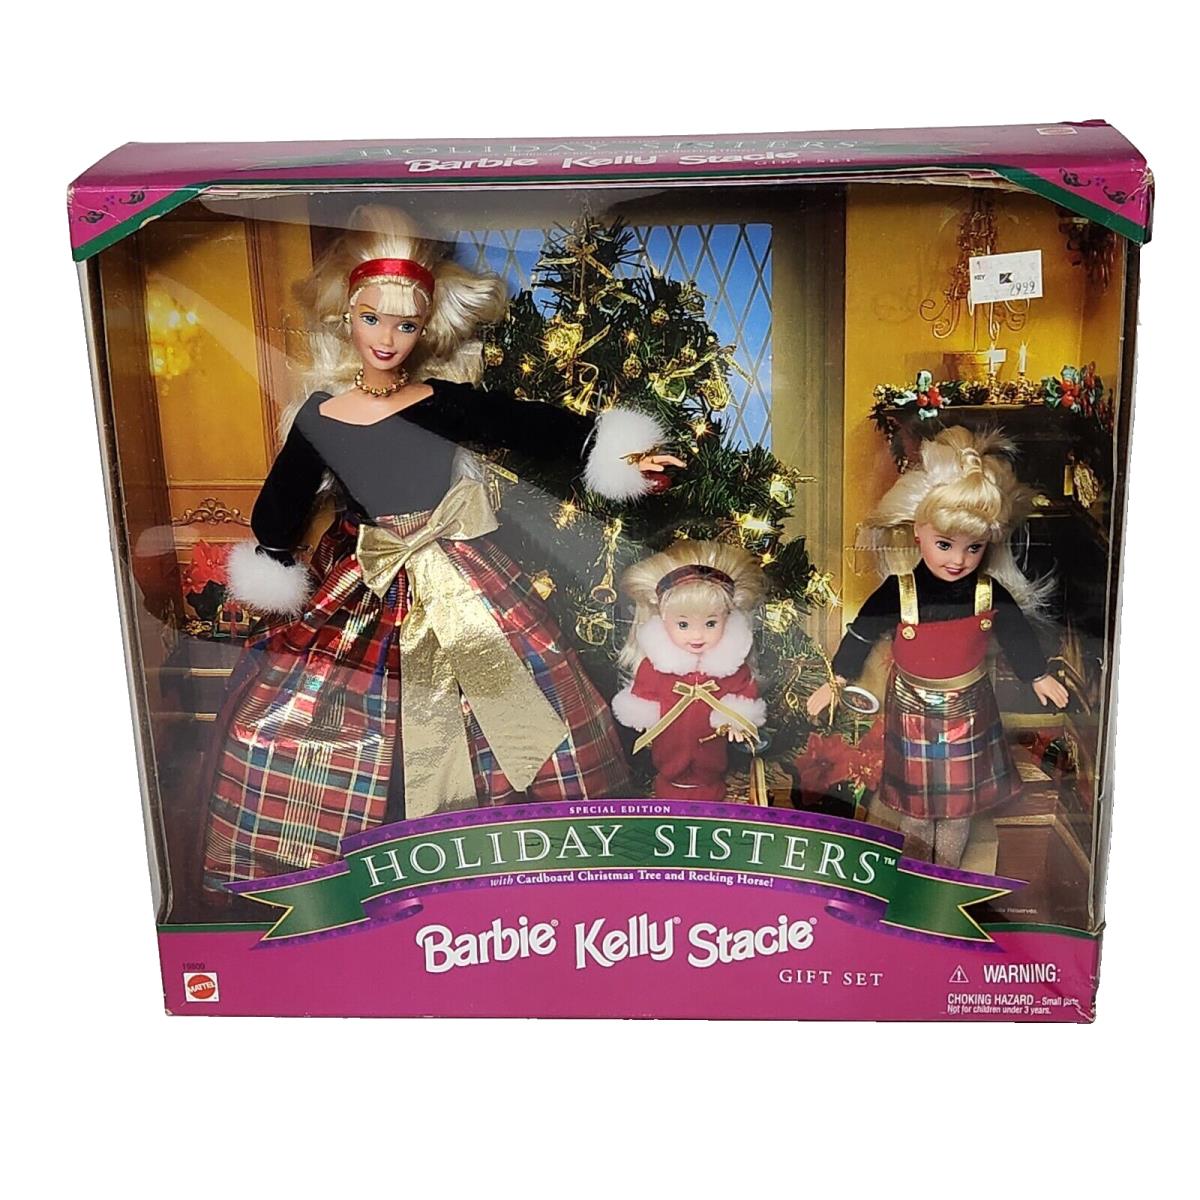 Vintage 1998 Holiday Sisters Barbie Kelly Stacie Doll Mattel Nos Box 19809